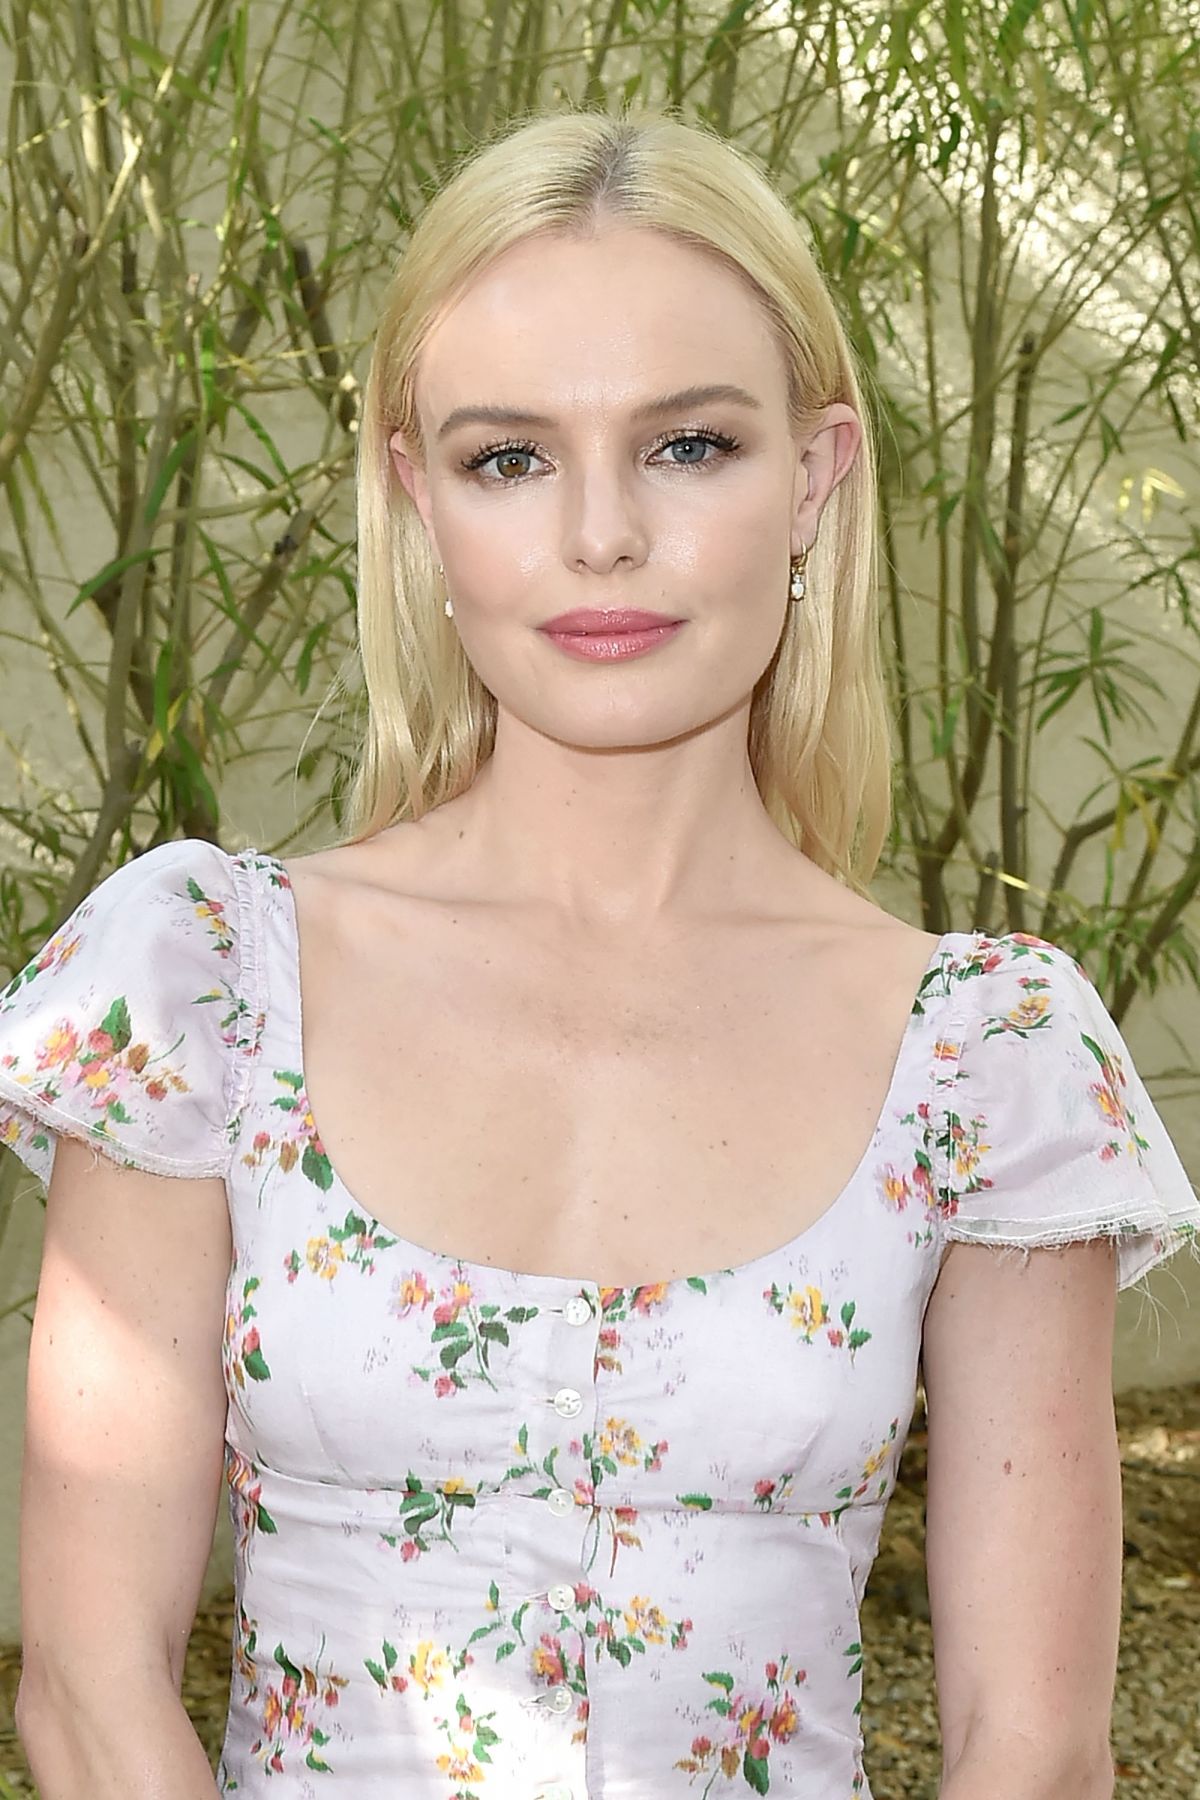 Kate Bosworth At 2017 Palm Springs International Festival Of Short Films Awards Ceremony 0625